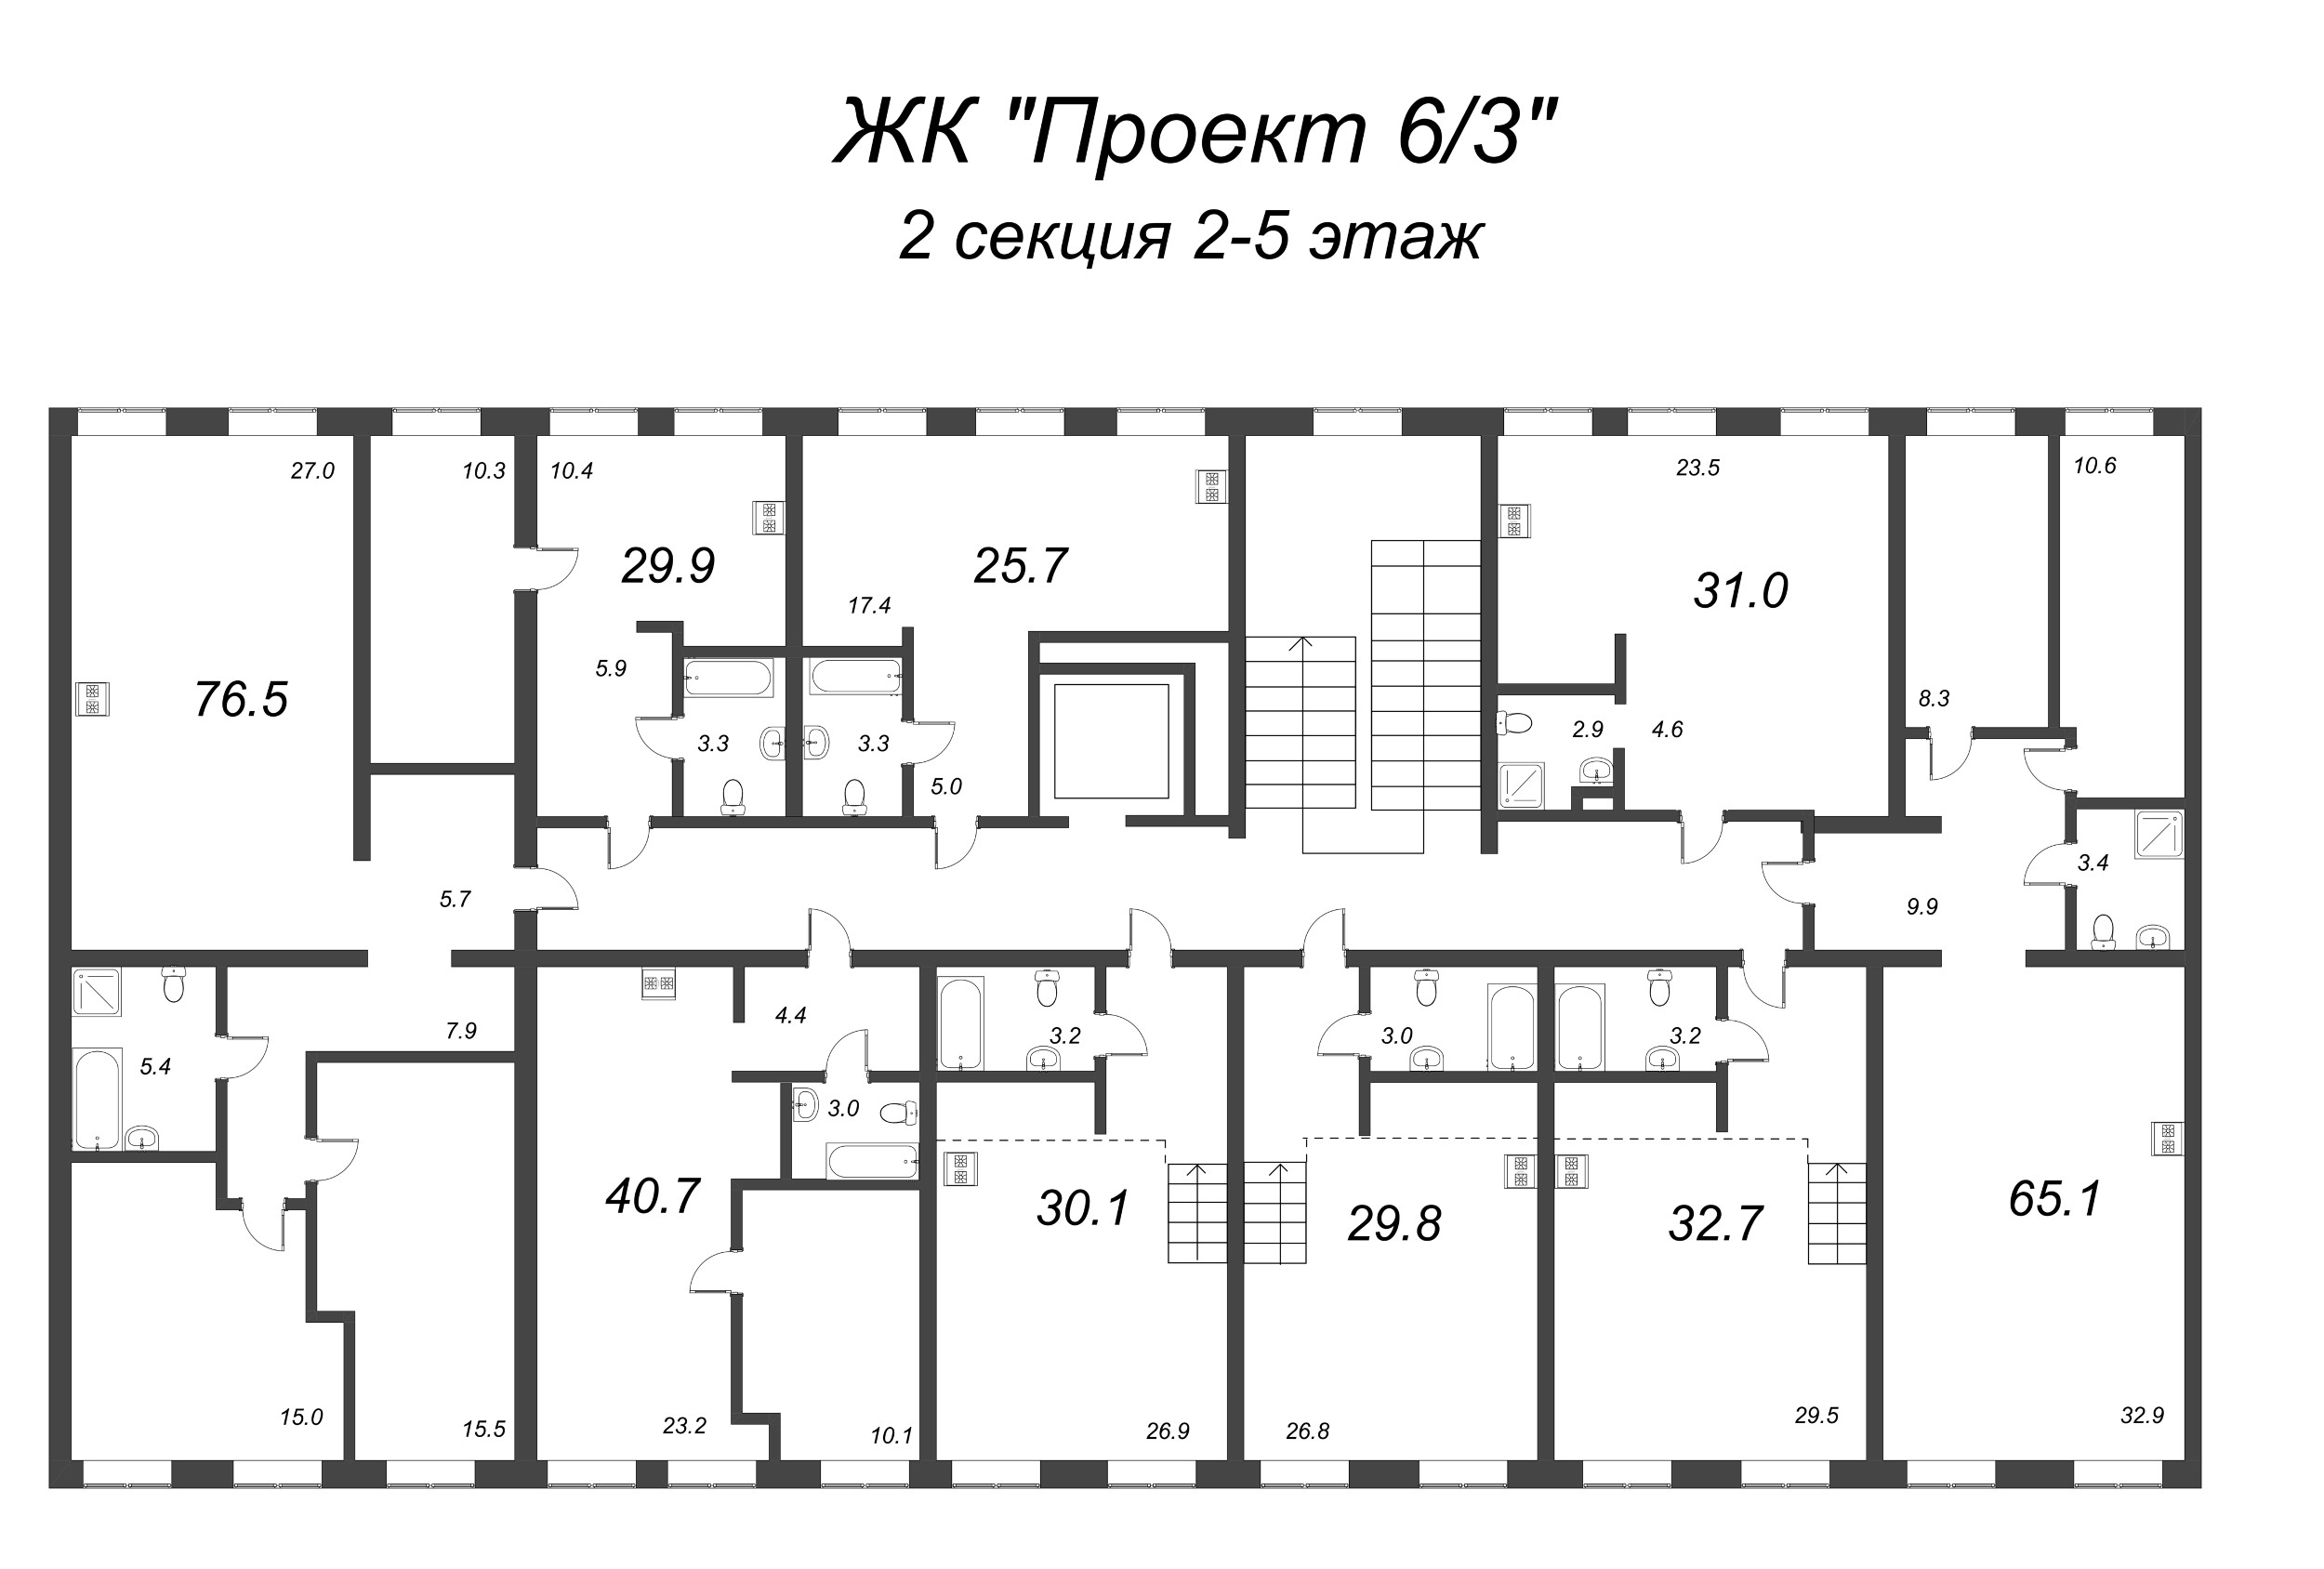 3-комнатная (Евро) квартира, 76.5 м² - планировка этажа